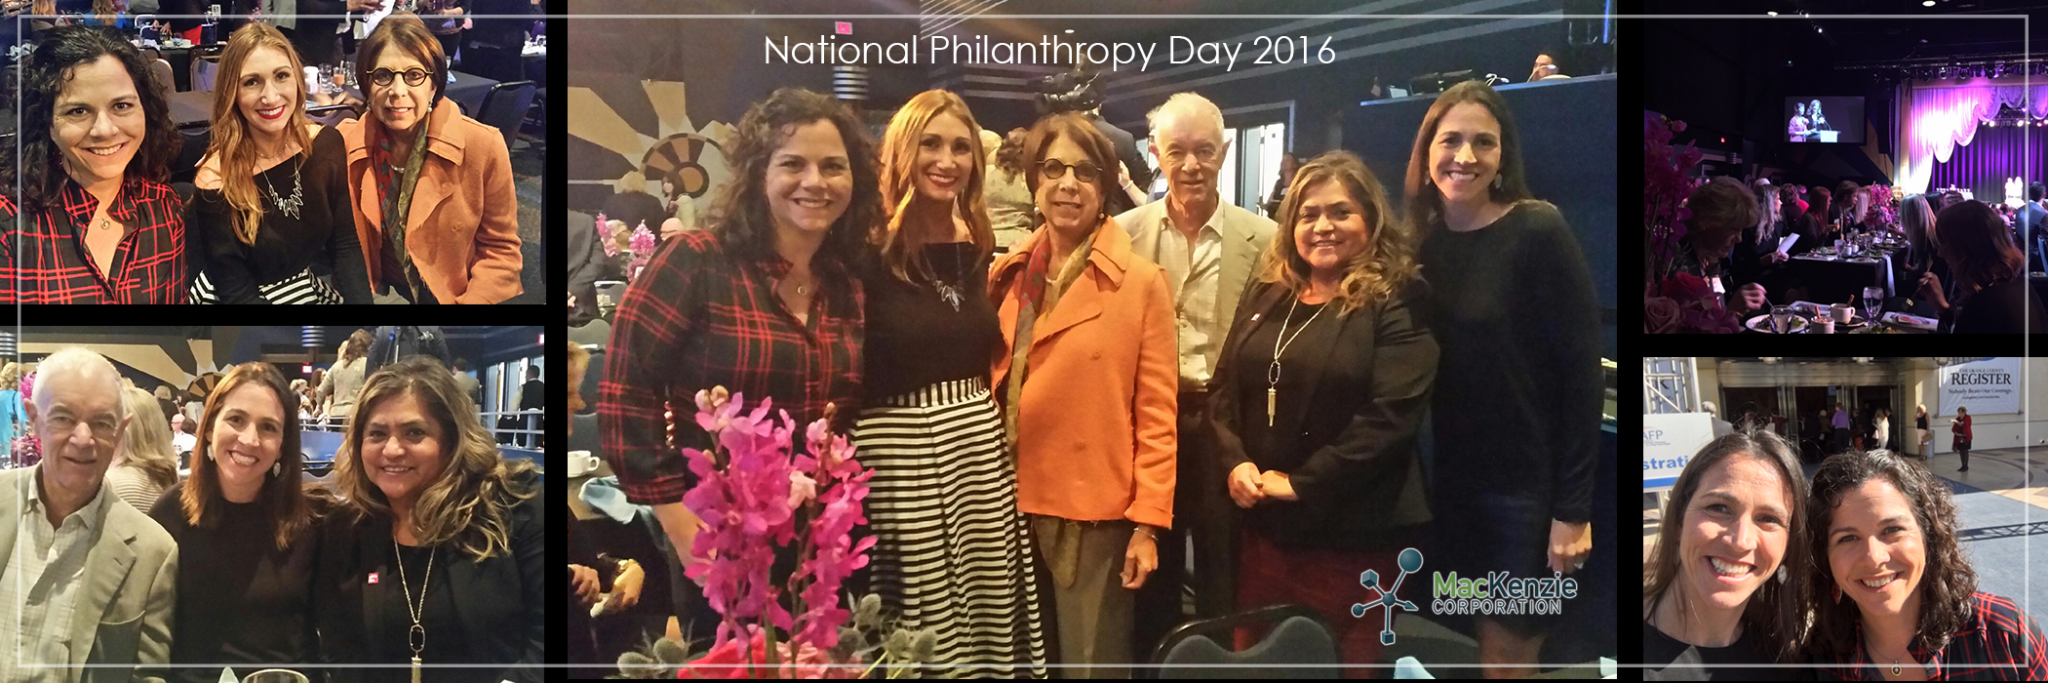 National Philanthropy Day 2016